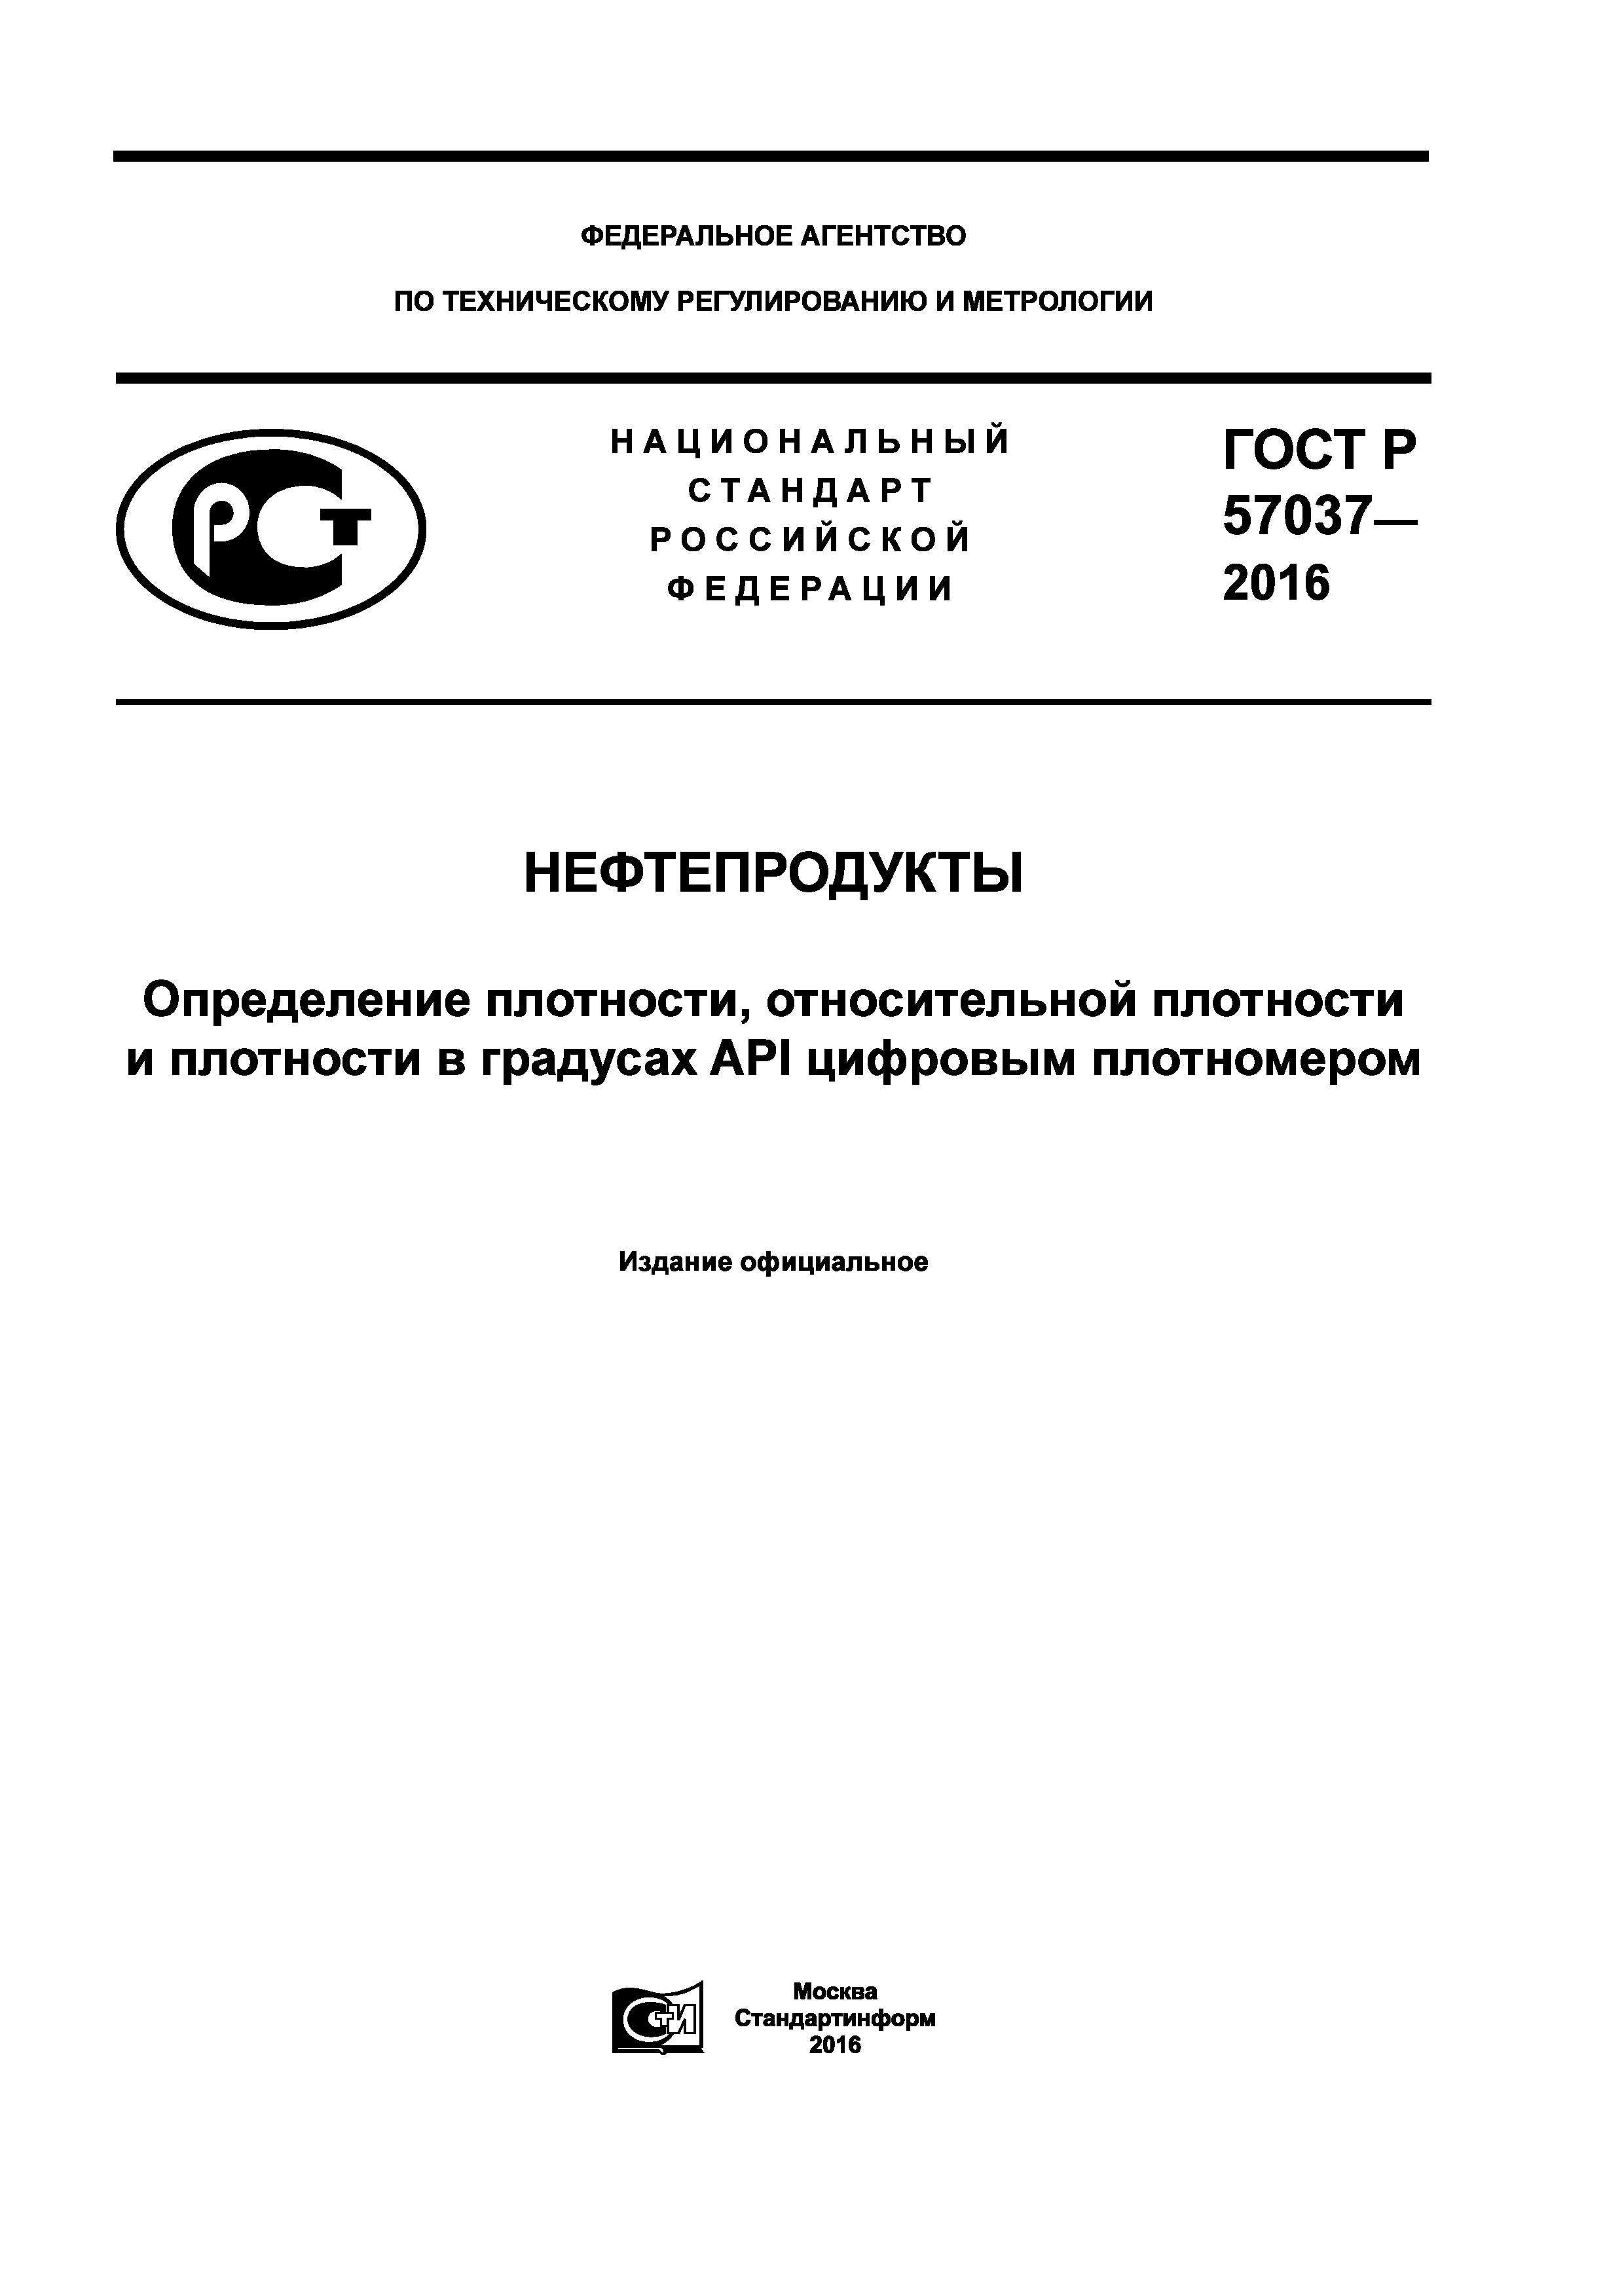 ГОСТ Р 57037-2016